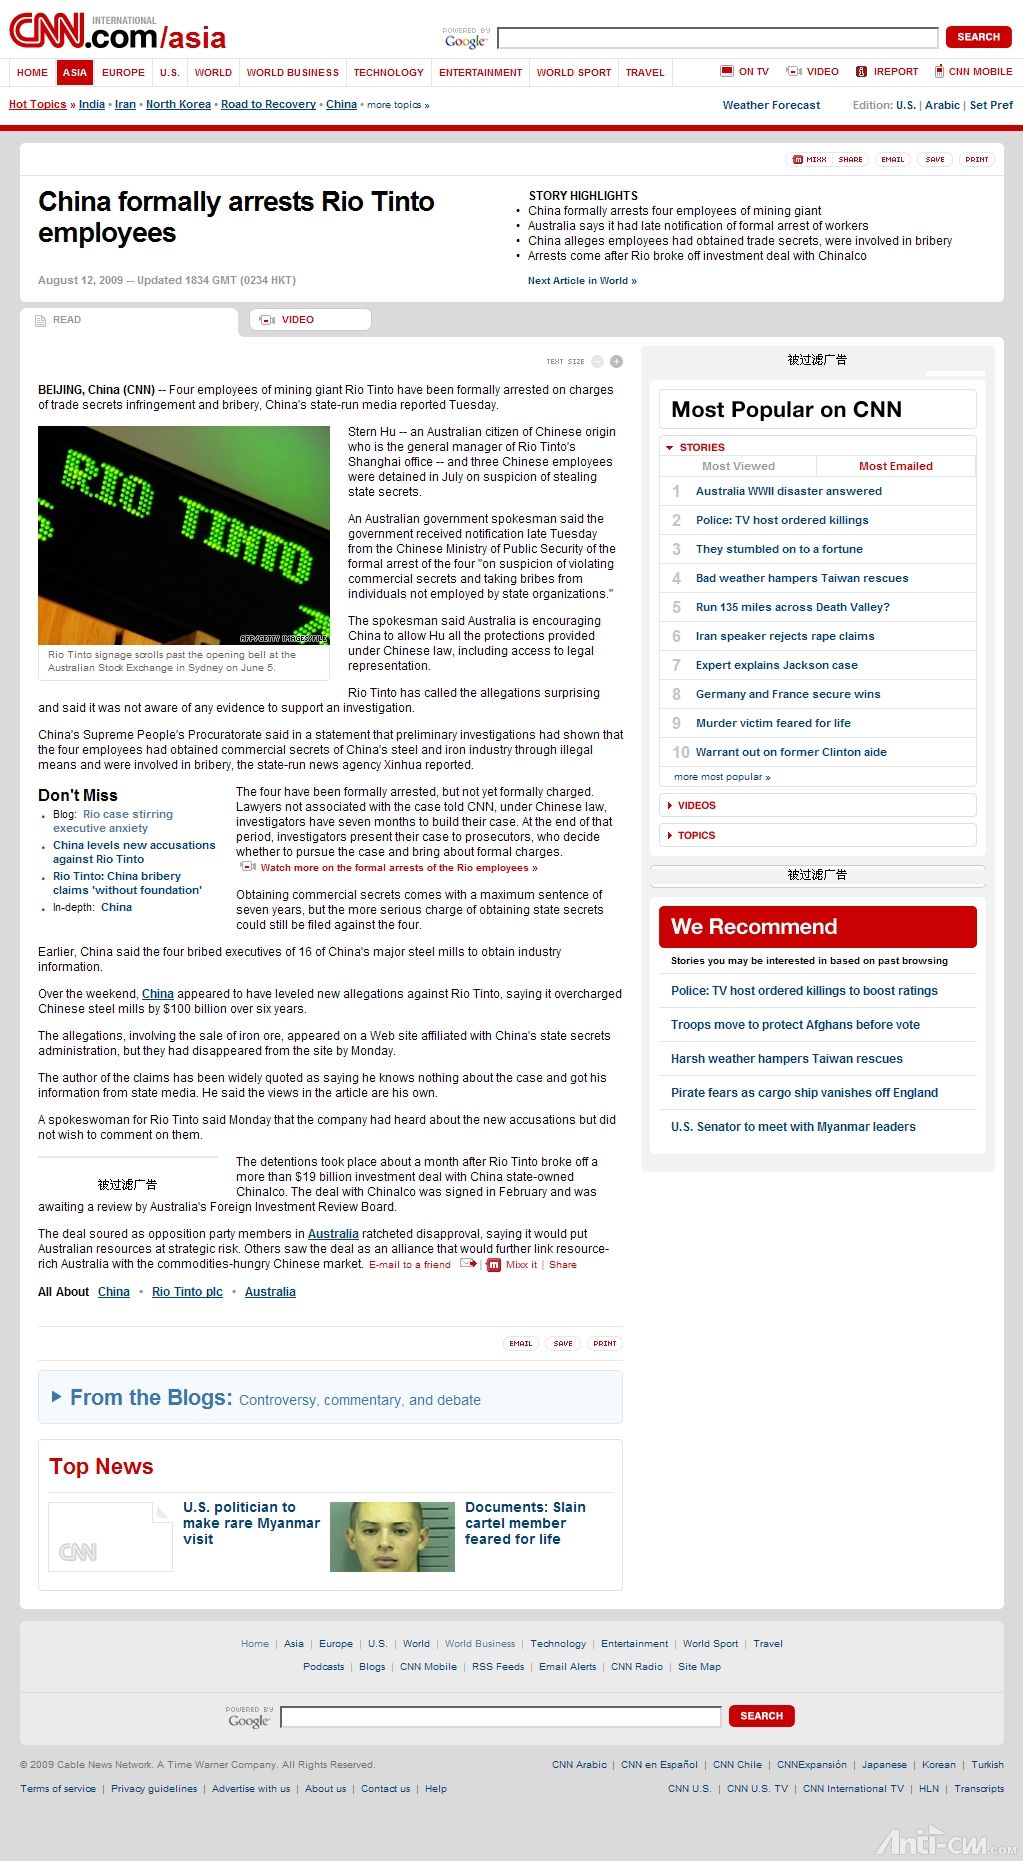 China formally arrests Rio Tinto employees - CNN_com.jpg